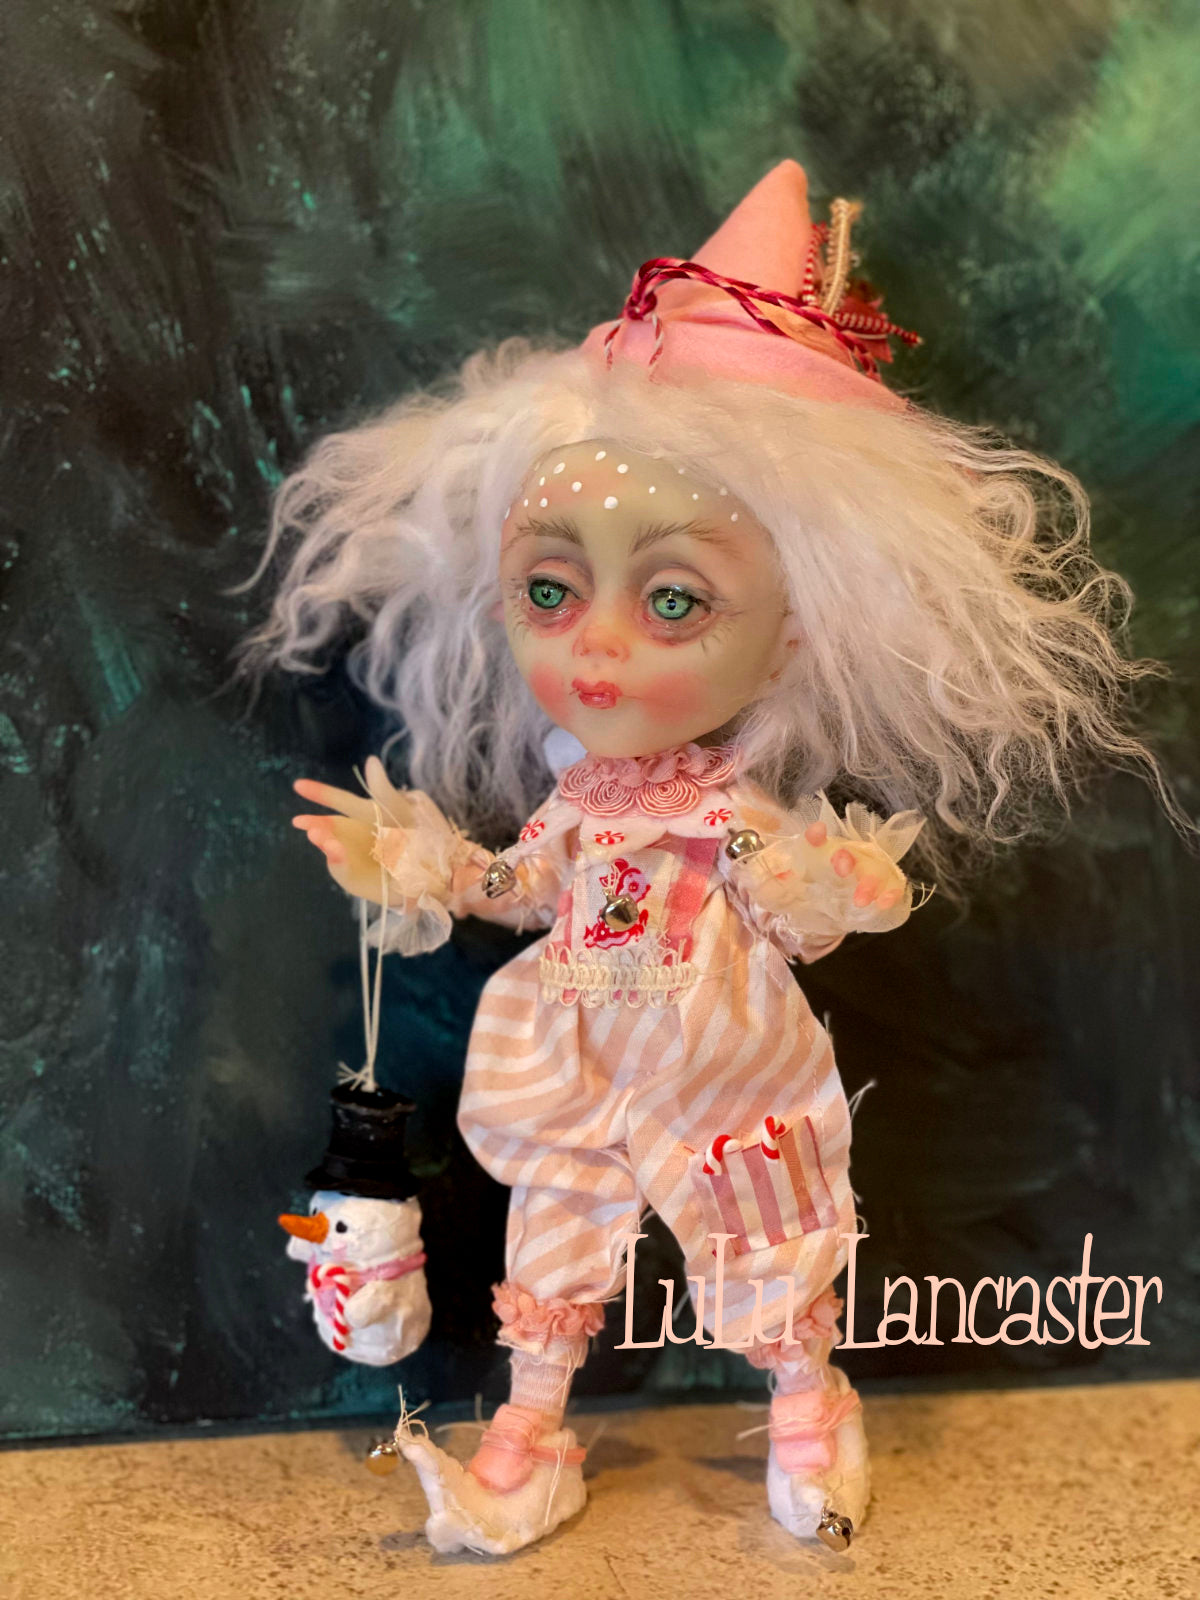 Sugar Biscuit the Christmas Elf Original LuLu Lancaster Art Doll